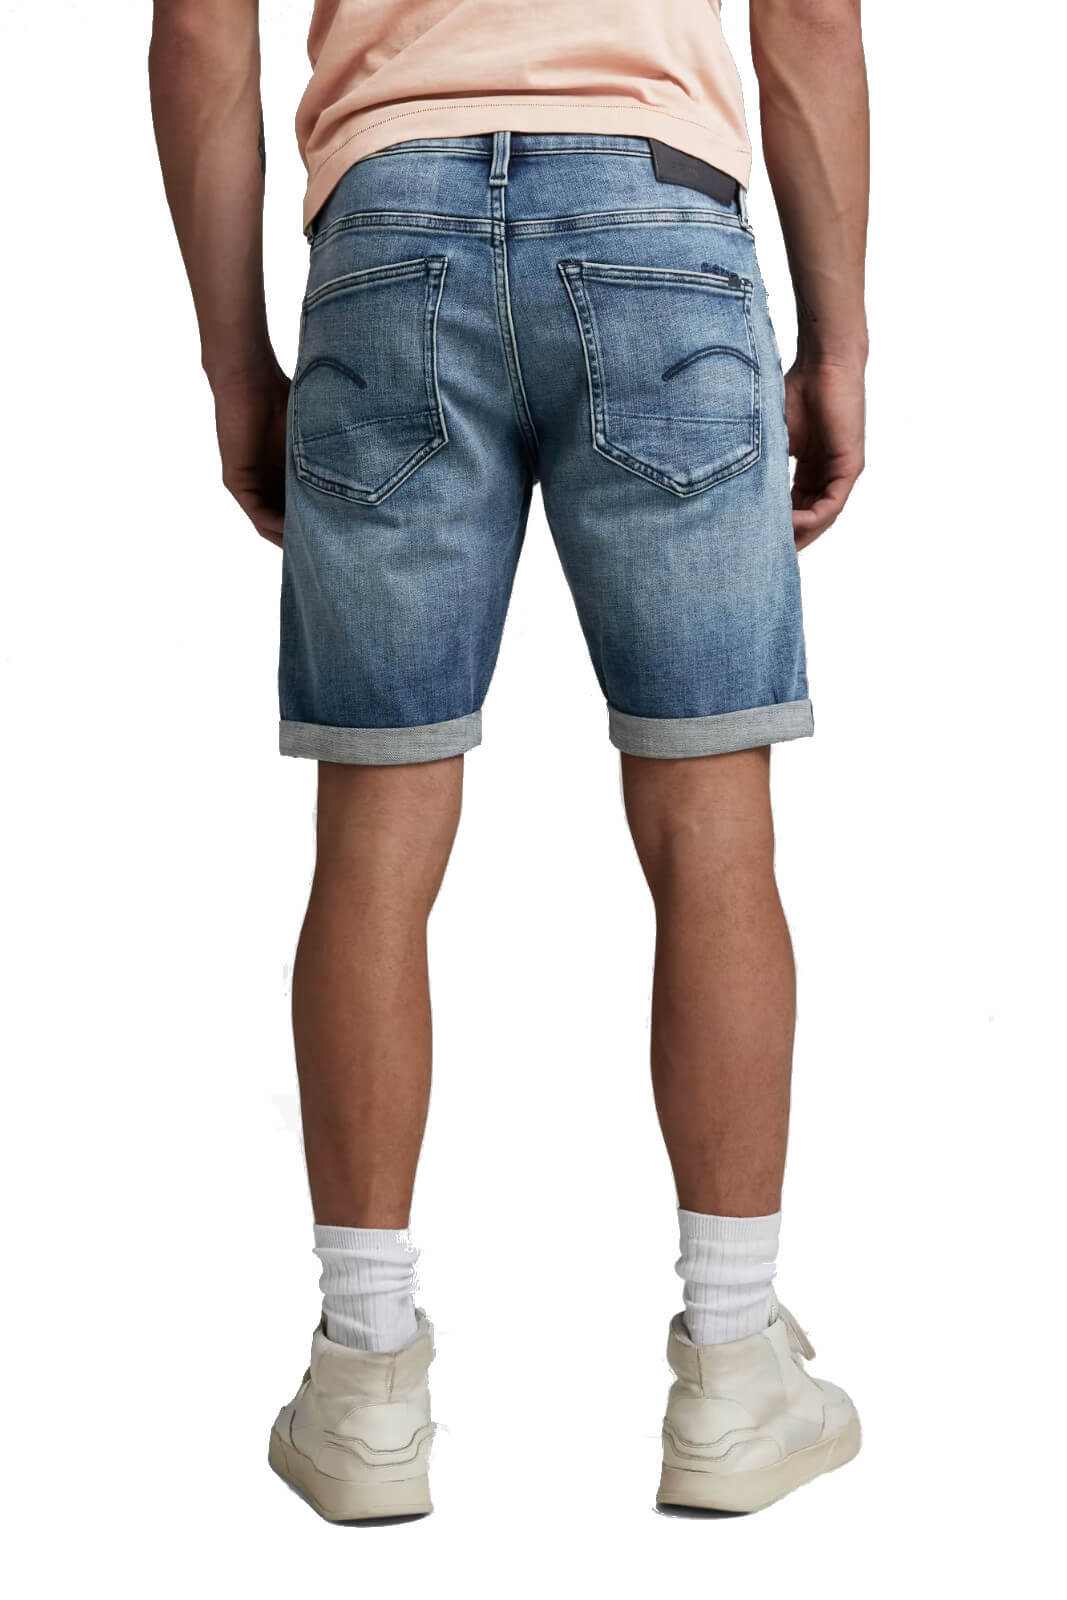 G-Star RAW men's bermuda shorts 3301 SLIM DENIM SHORTS